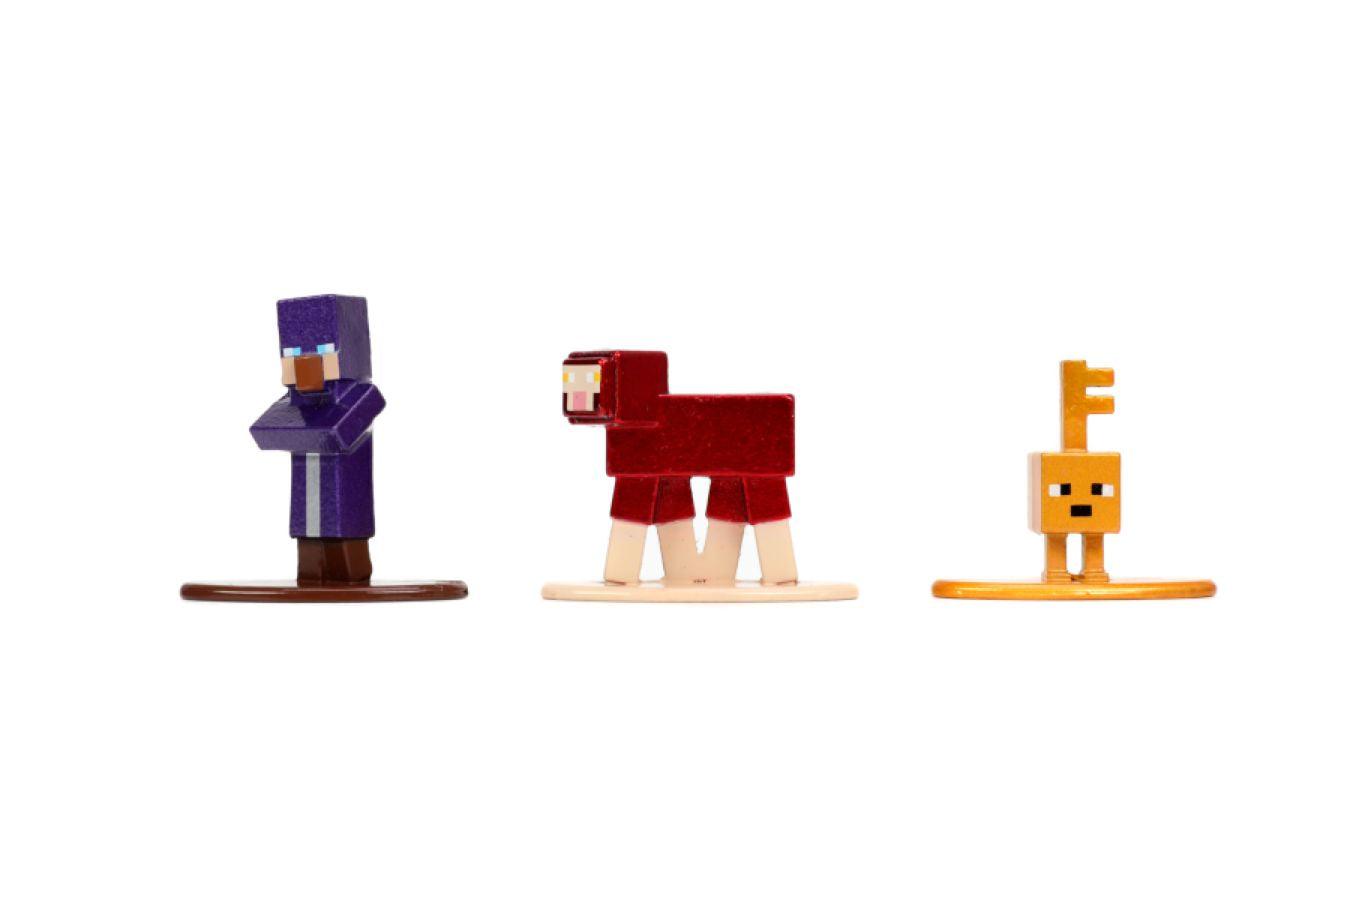 JAD33424 Minecraft - Minecraft Dungeons Nano MetalFig 18-Pack Set - Jada Toys - Titan Pop Culture